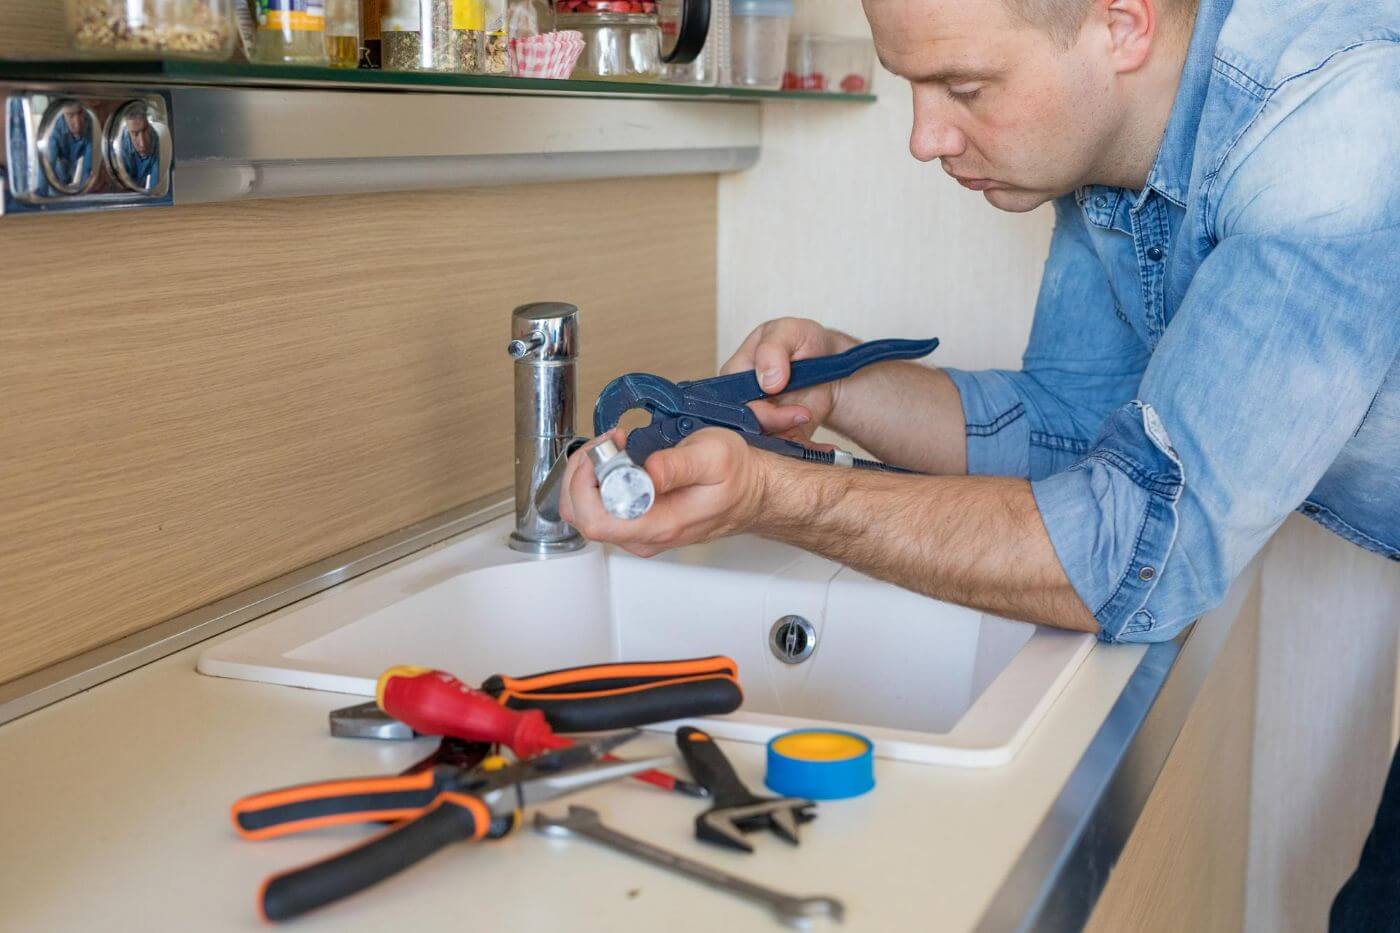 Man fixing leaking tap in kitchen